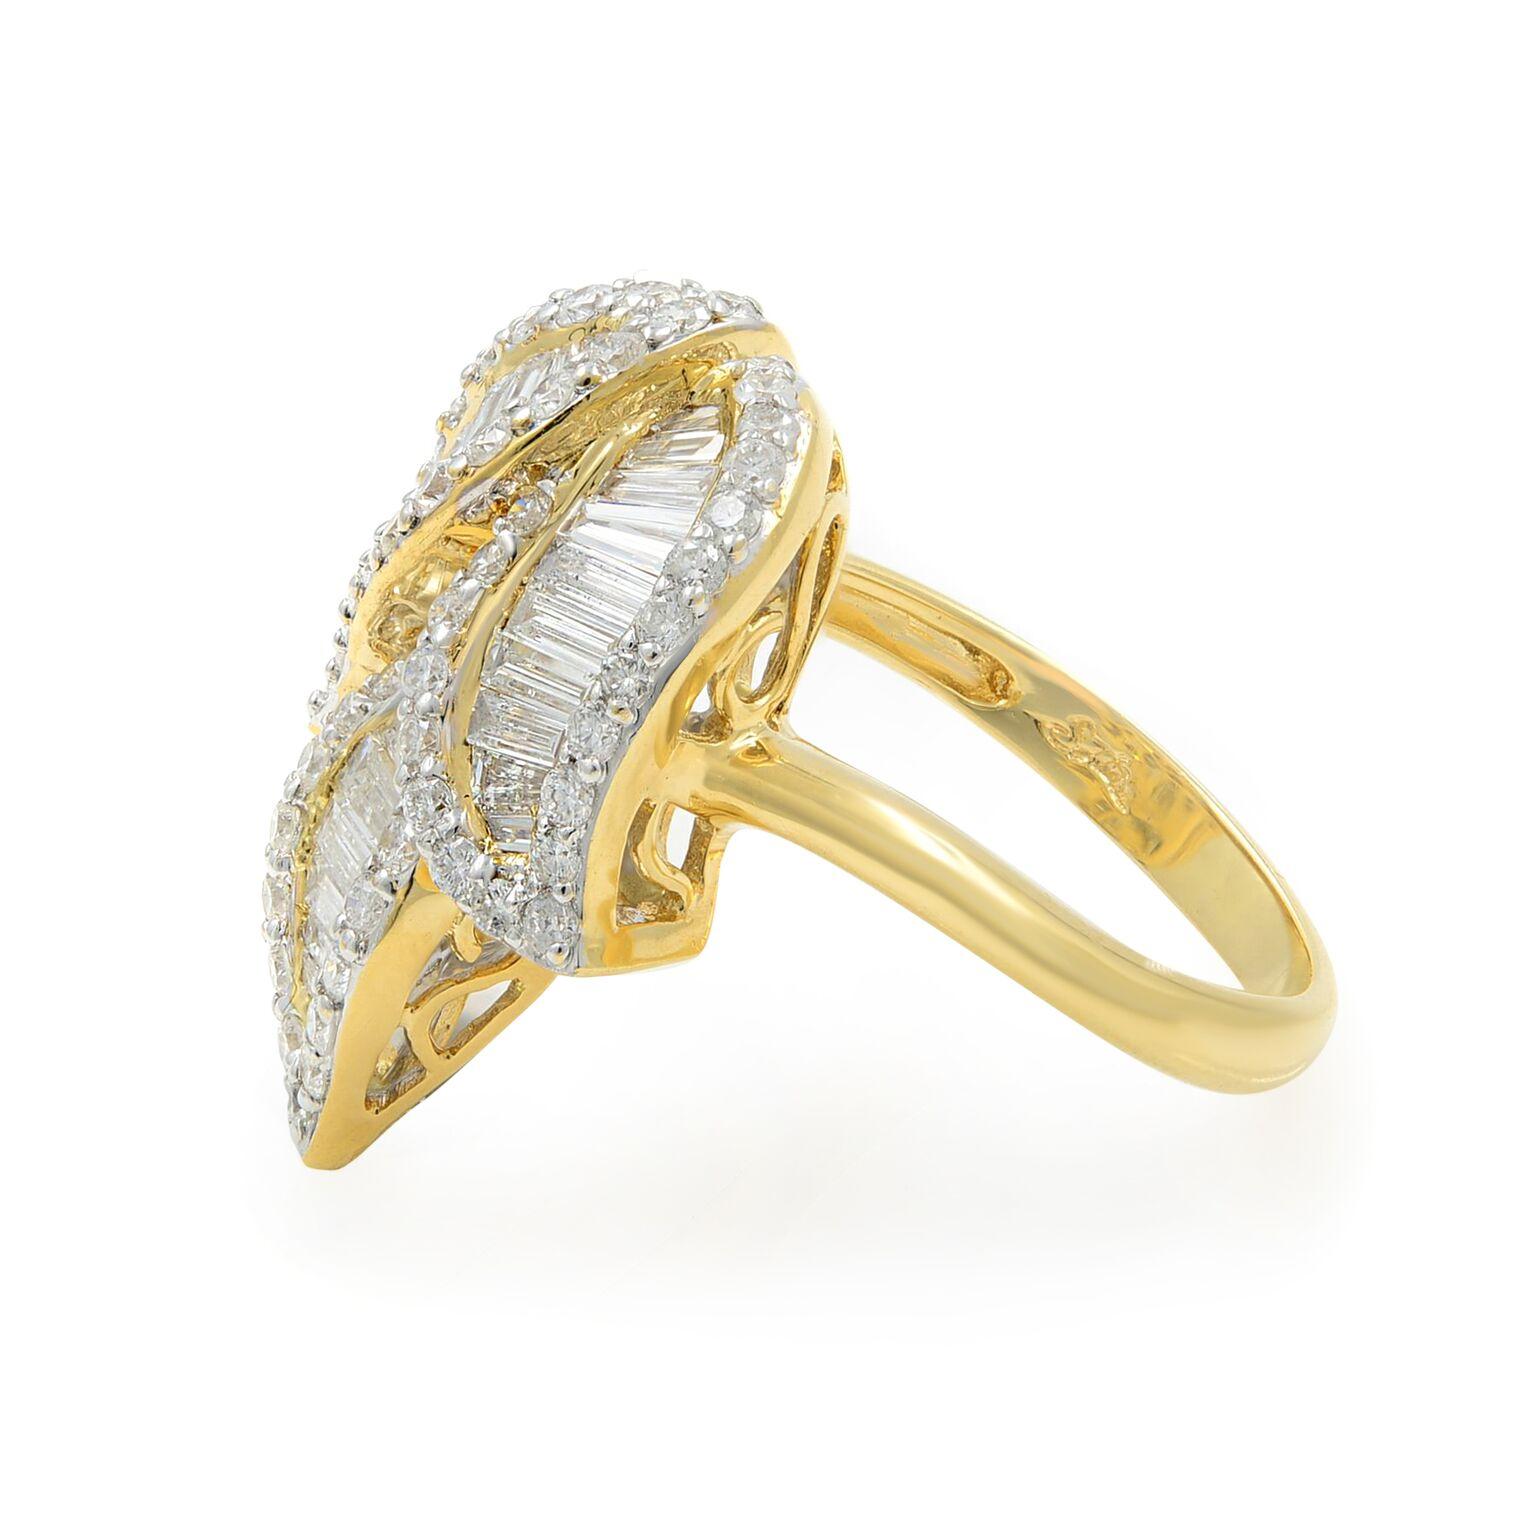 Rachel Koen Round and Baguette Cut Diamond Ring 18K Yellow Gold 1.86Cttw For Sale 1